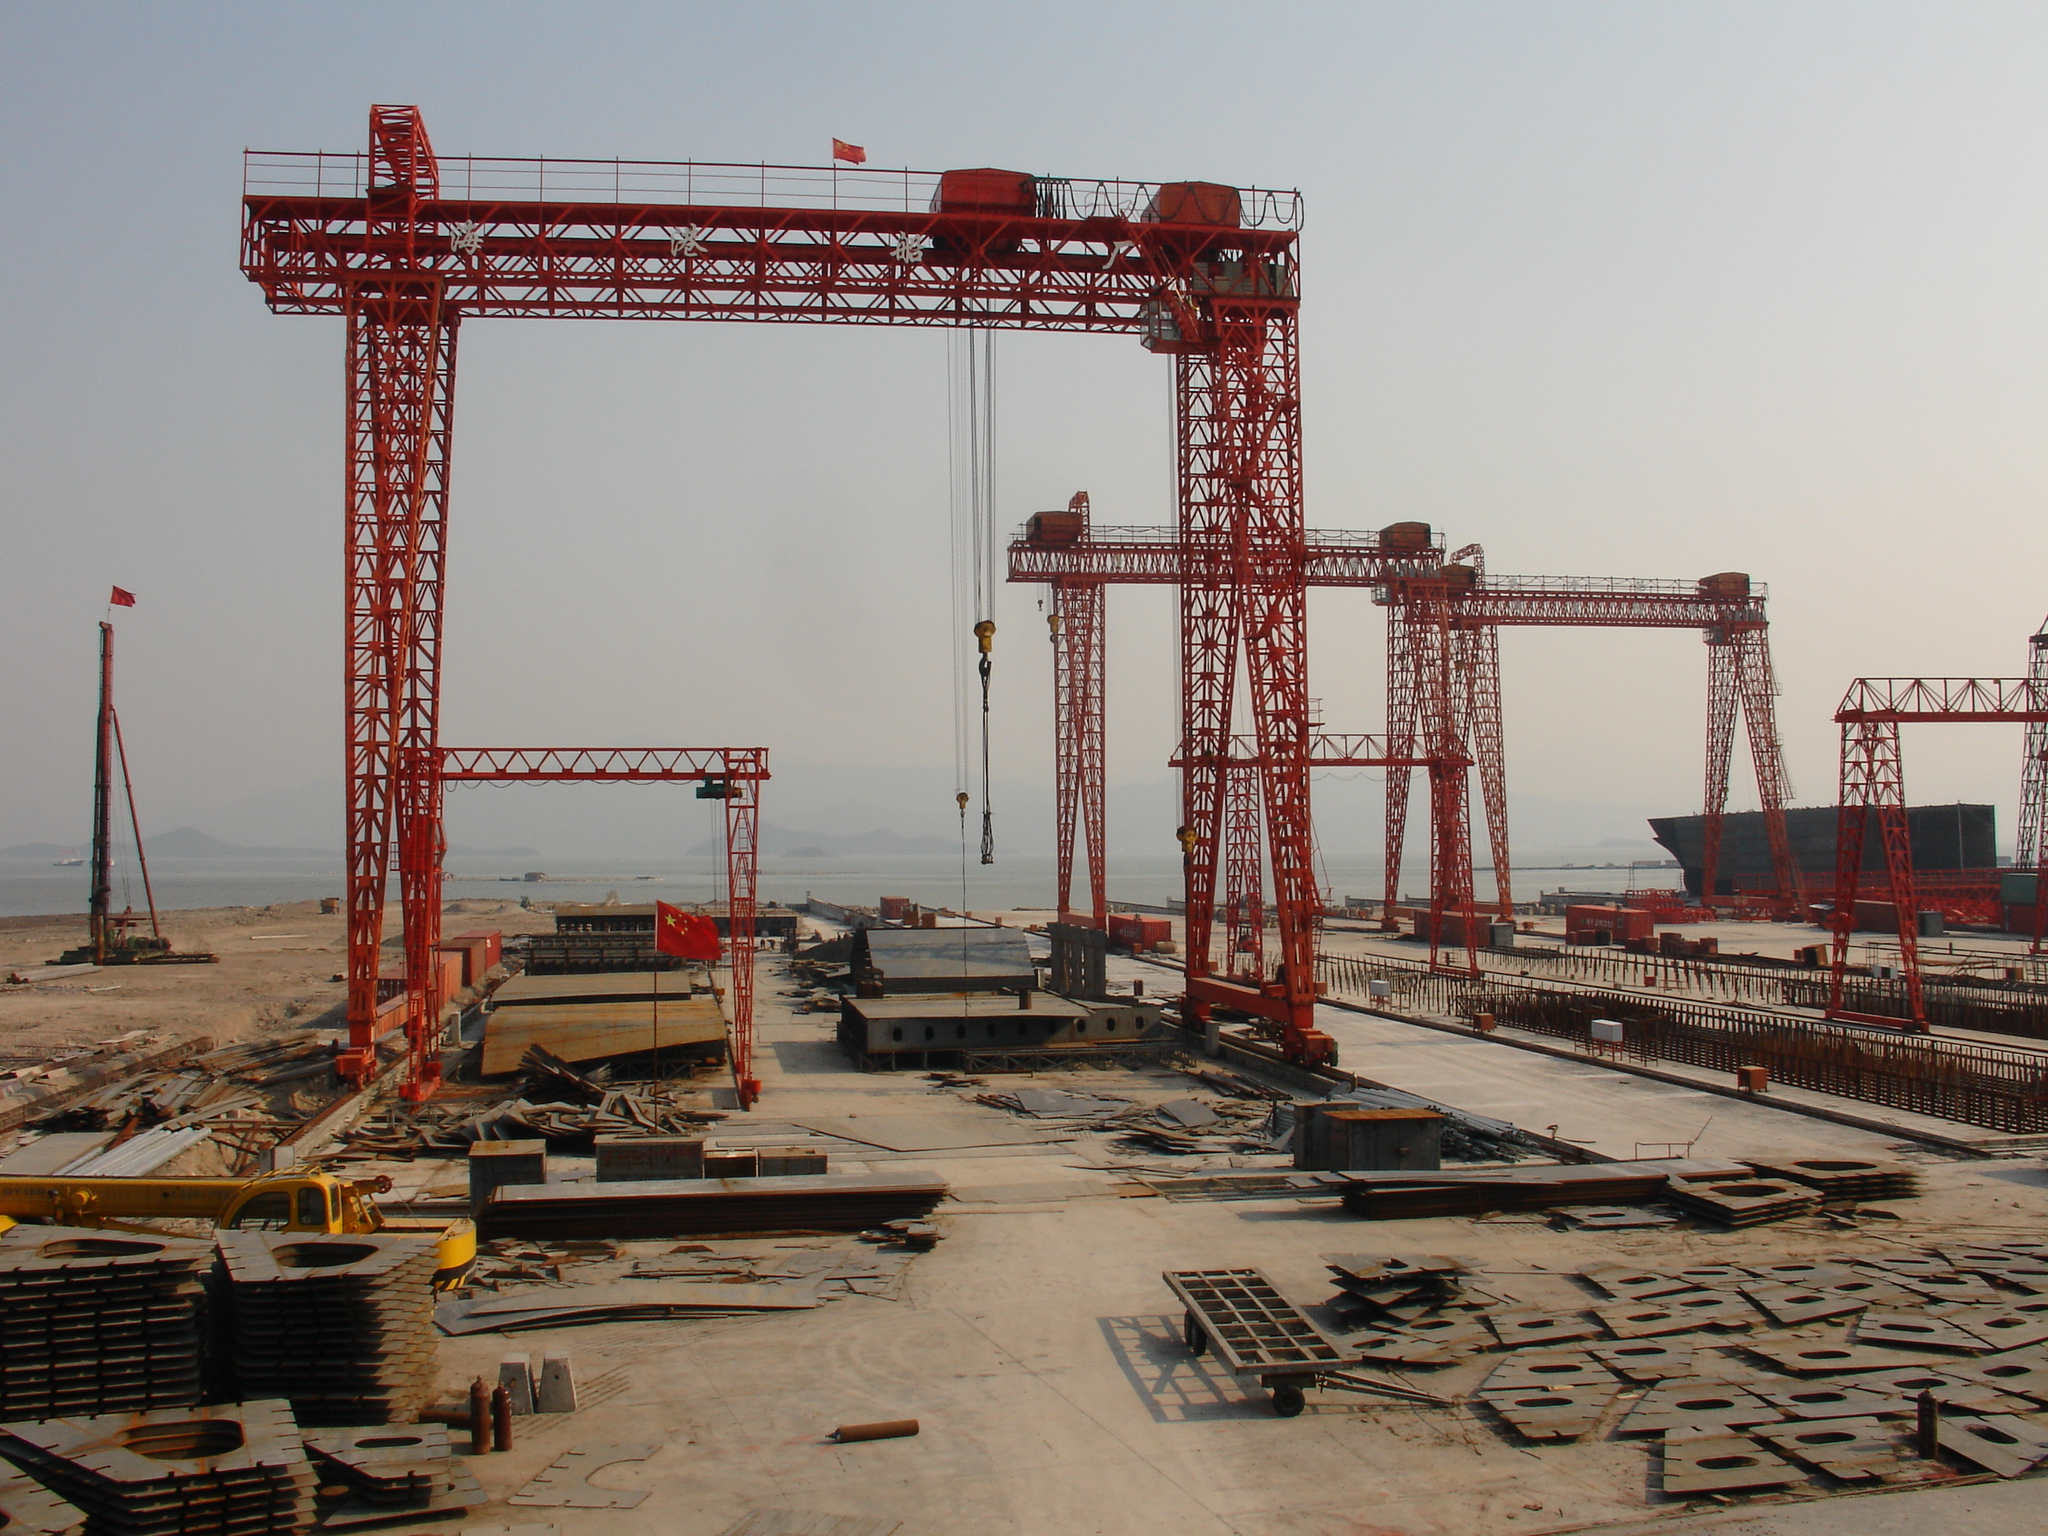 China Hydraulic Motor Shipyard Cranes Electric Shipyard Gantry Deck Crane For Stock Yards factory